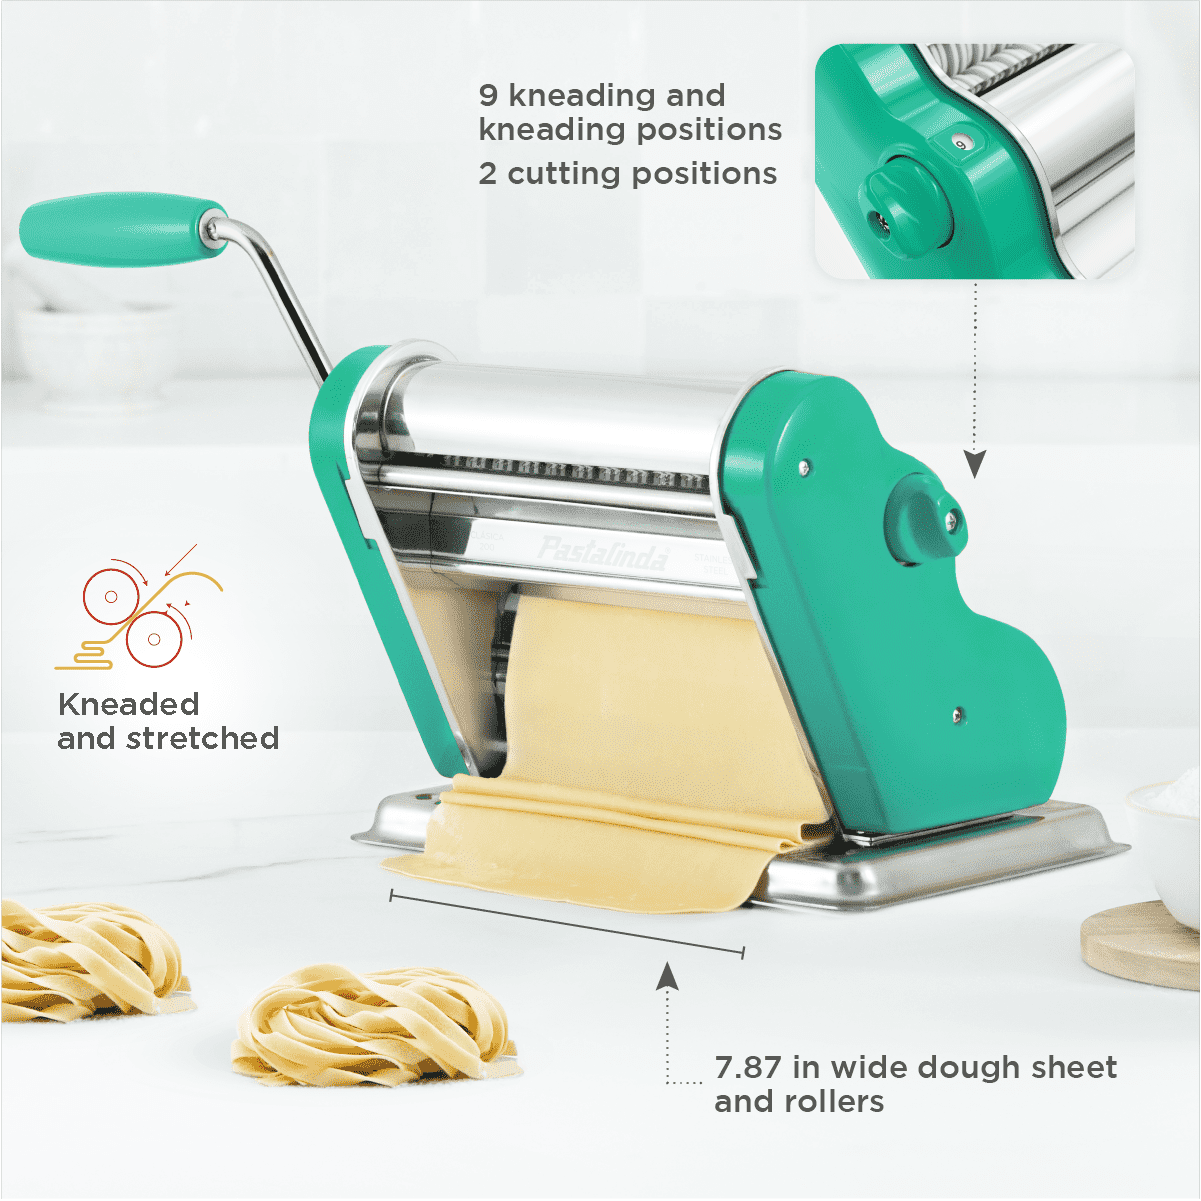 Pastalinda Classic 200 Green Pasta Maker Machine With Hand Crank And Two Clamps - Pastalinda